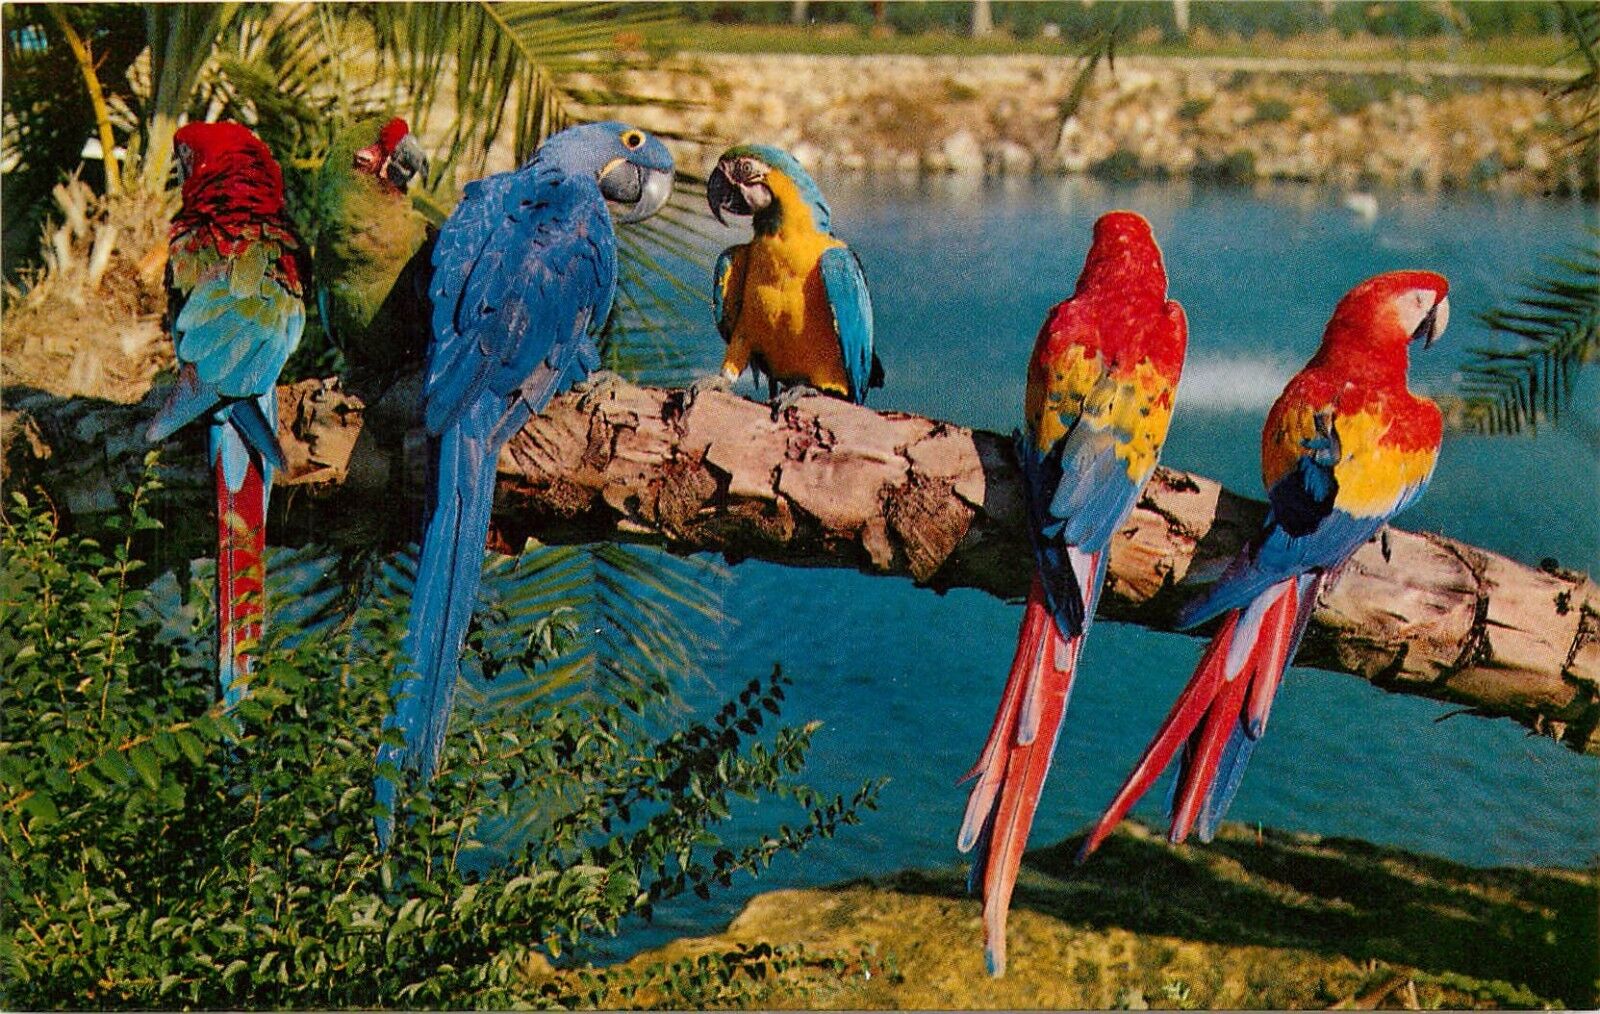 Tampa Florida Busch Gardens Trained Parrots Anheuser-Busch Brewery Postcard